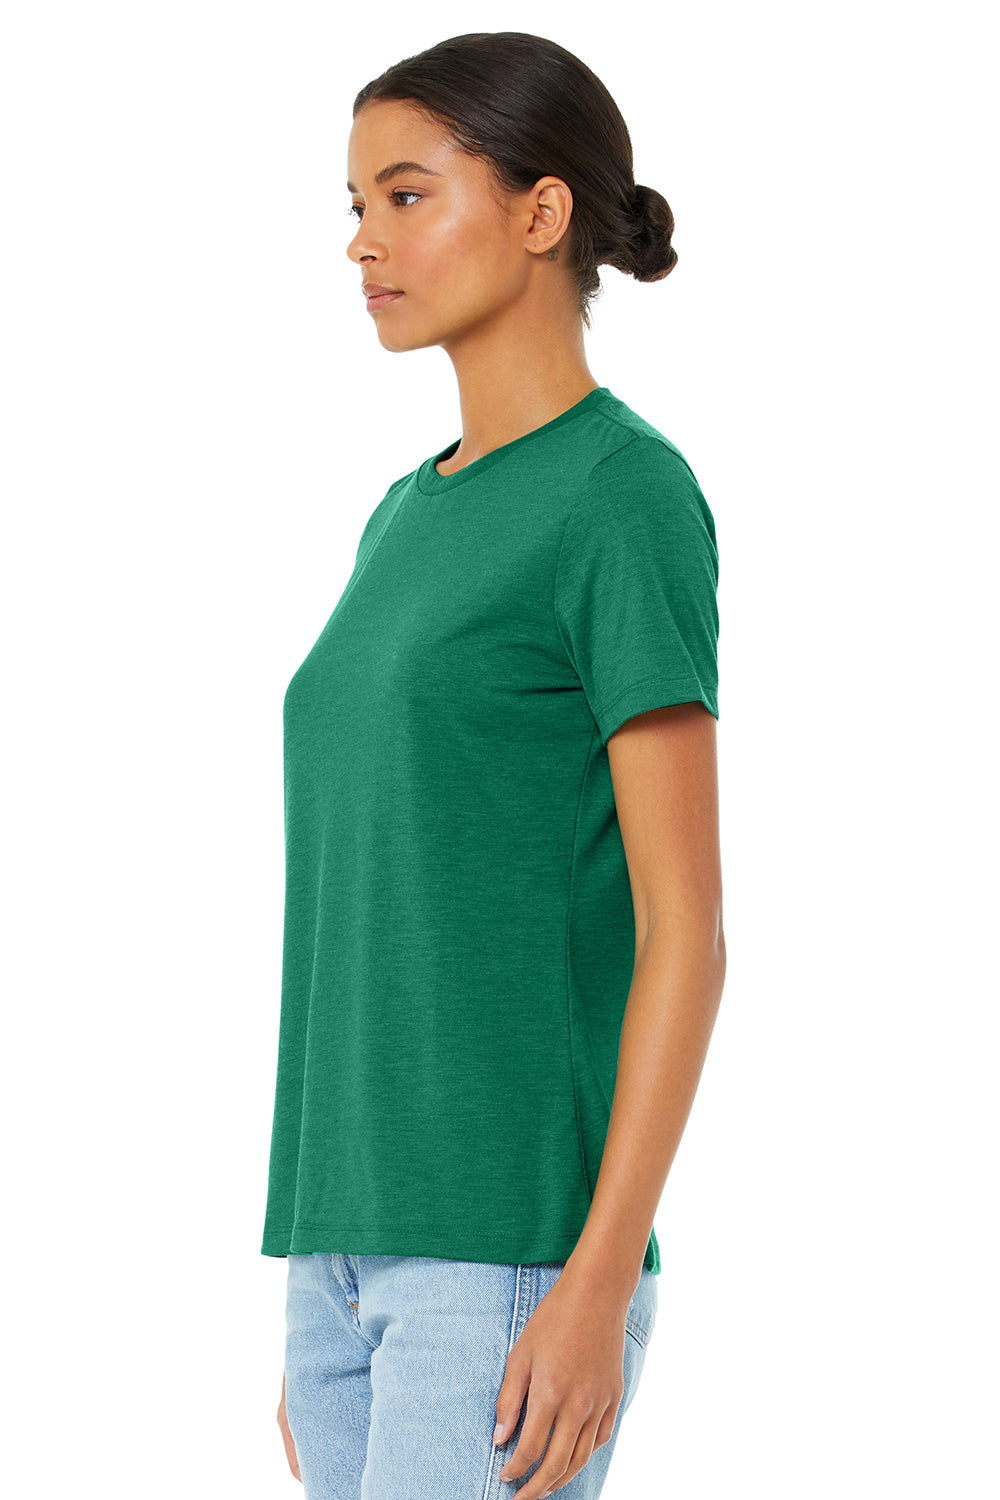 Bella + Canvas BC6413 Womens Short Sleeve Crewneck T-Shirt Kelly Green Model 3Q